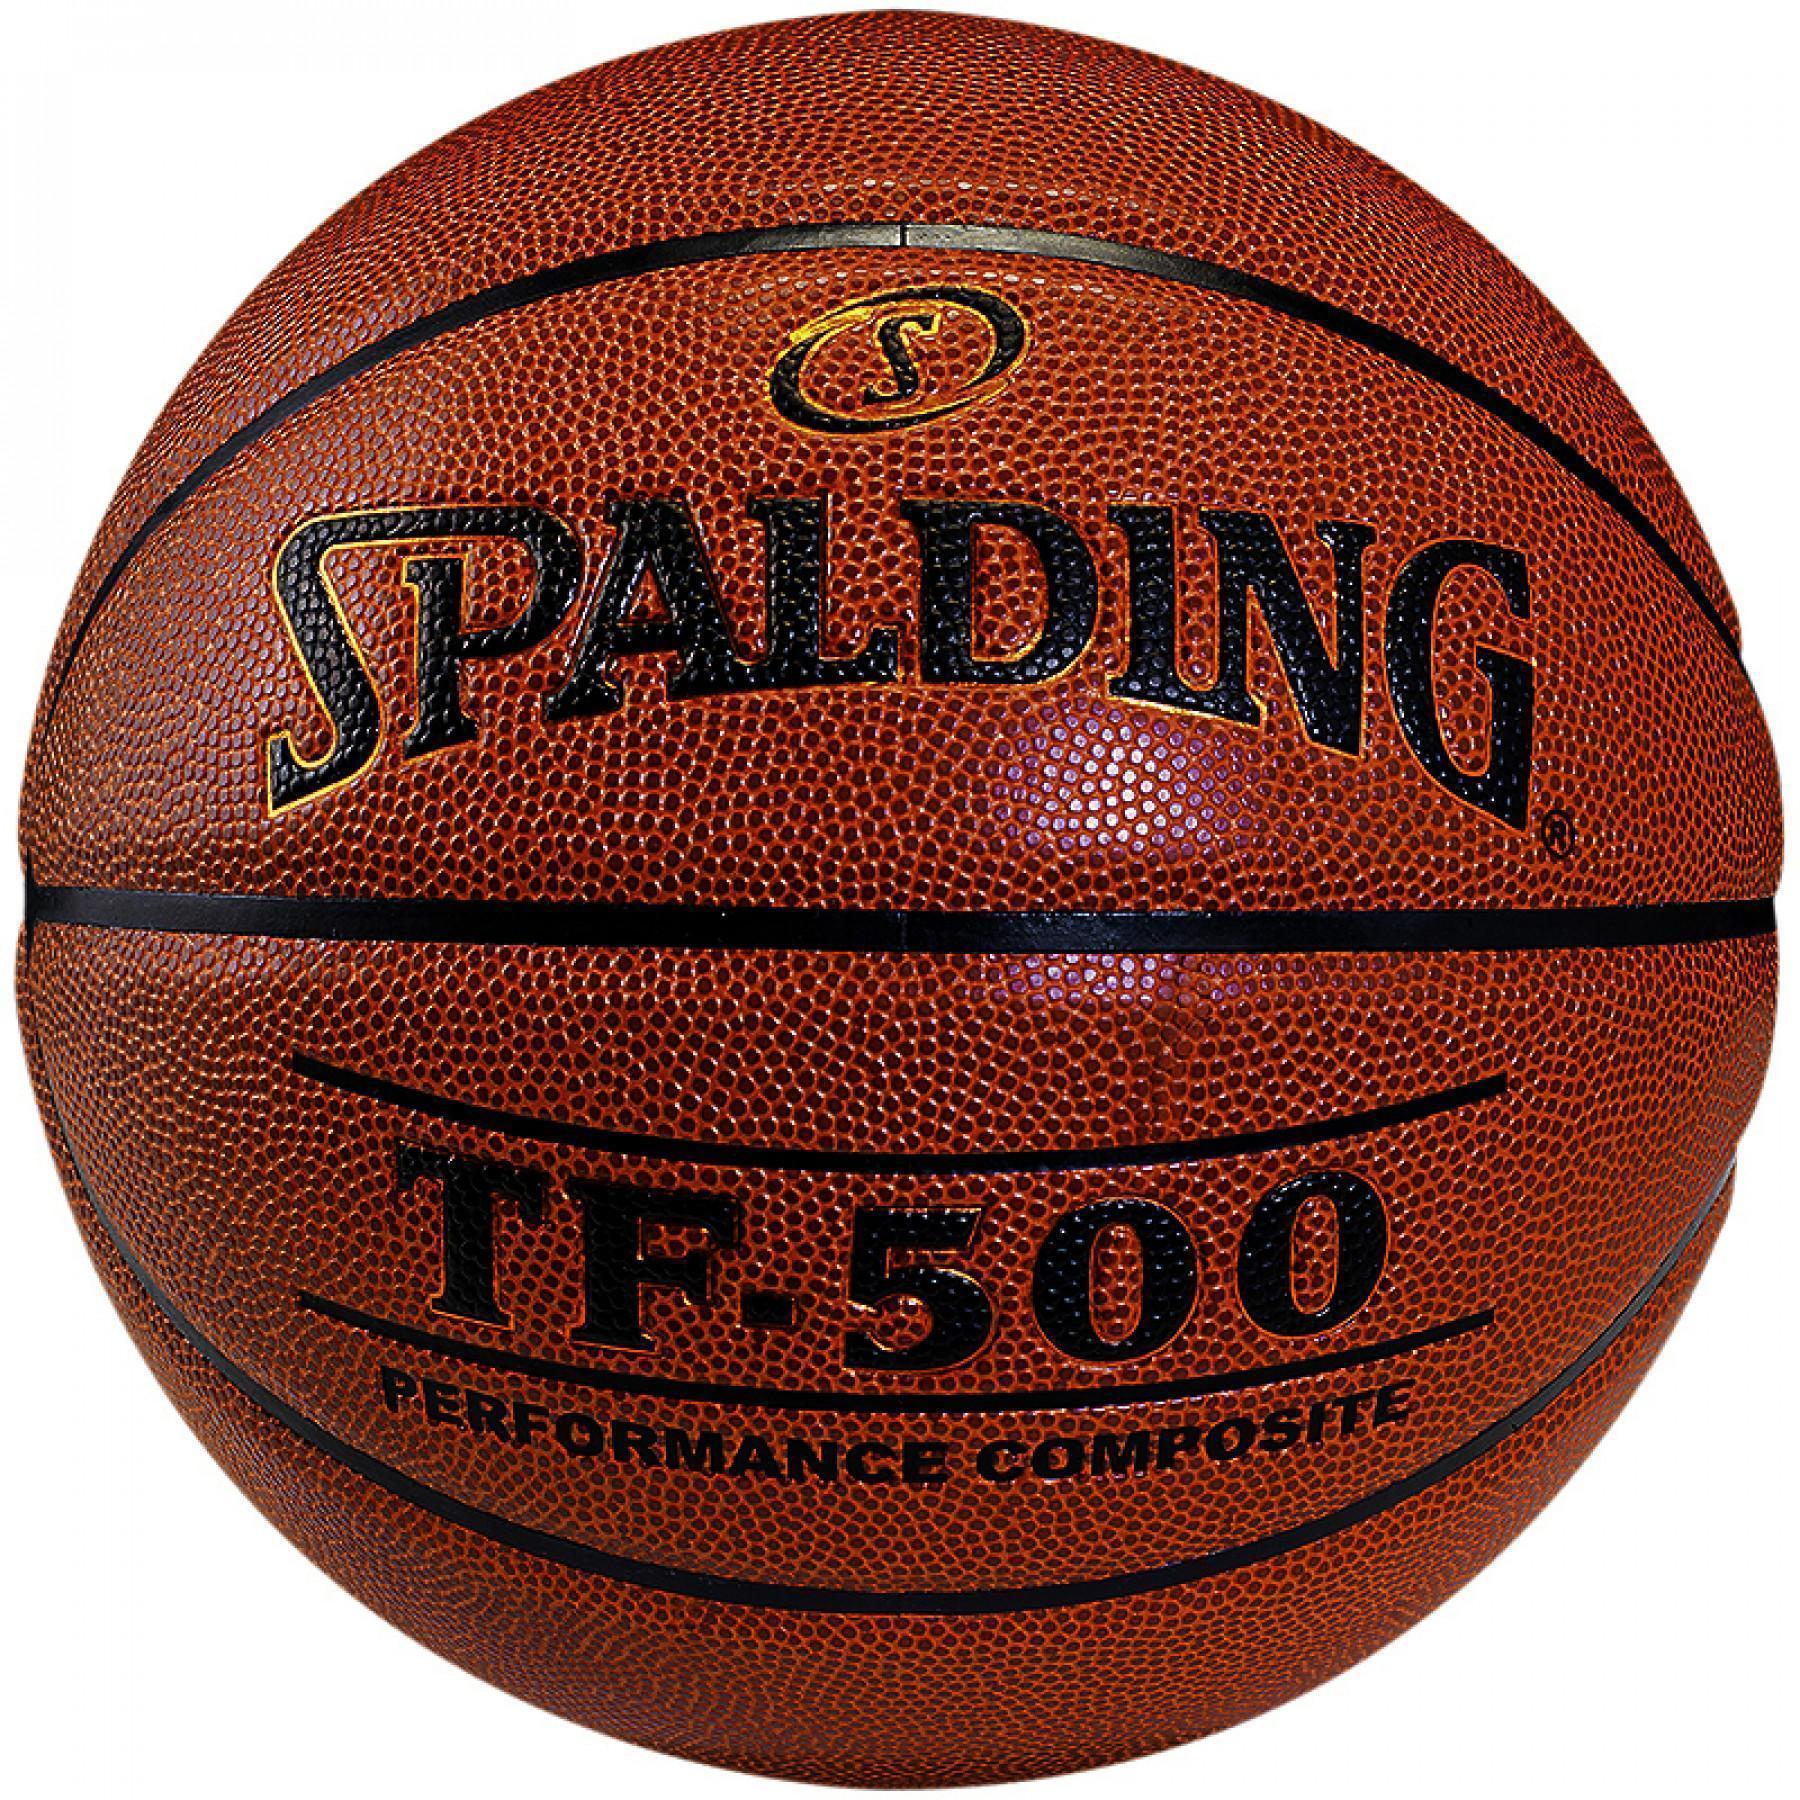 Ballon Spalding Spalding TF500 indoor/outdoor